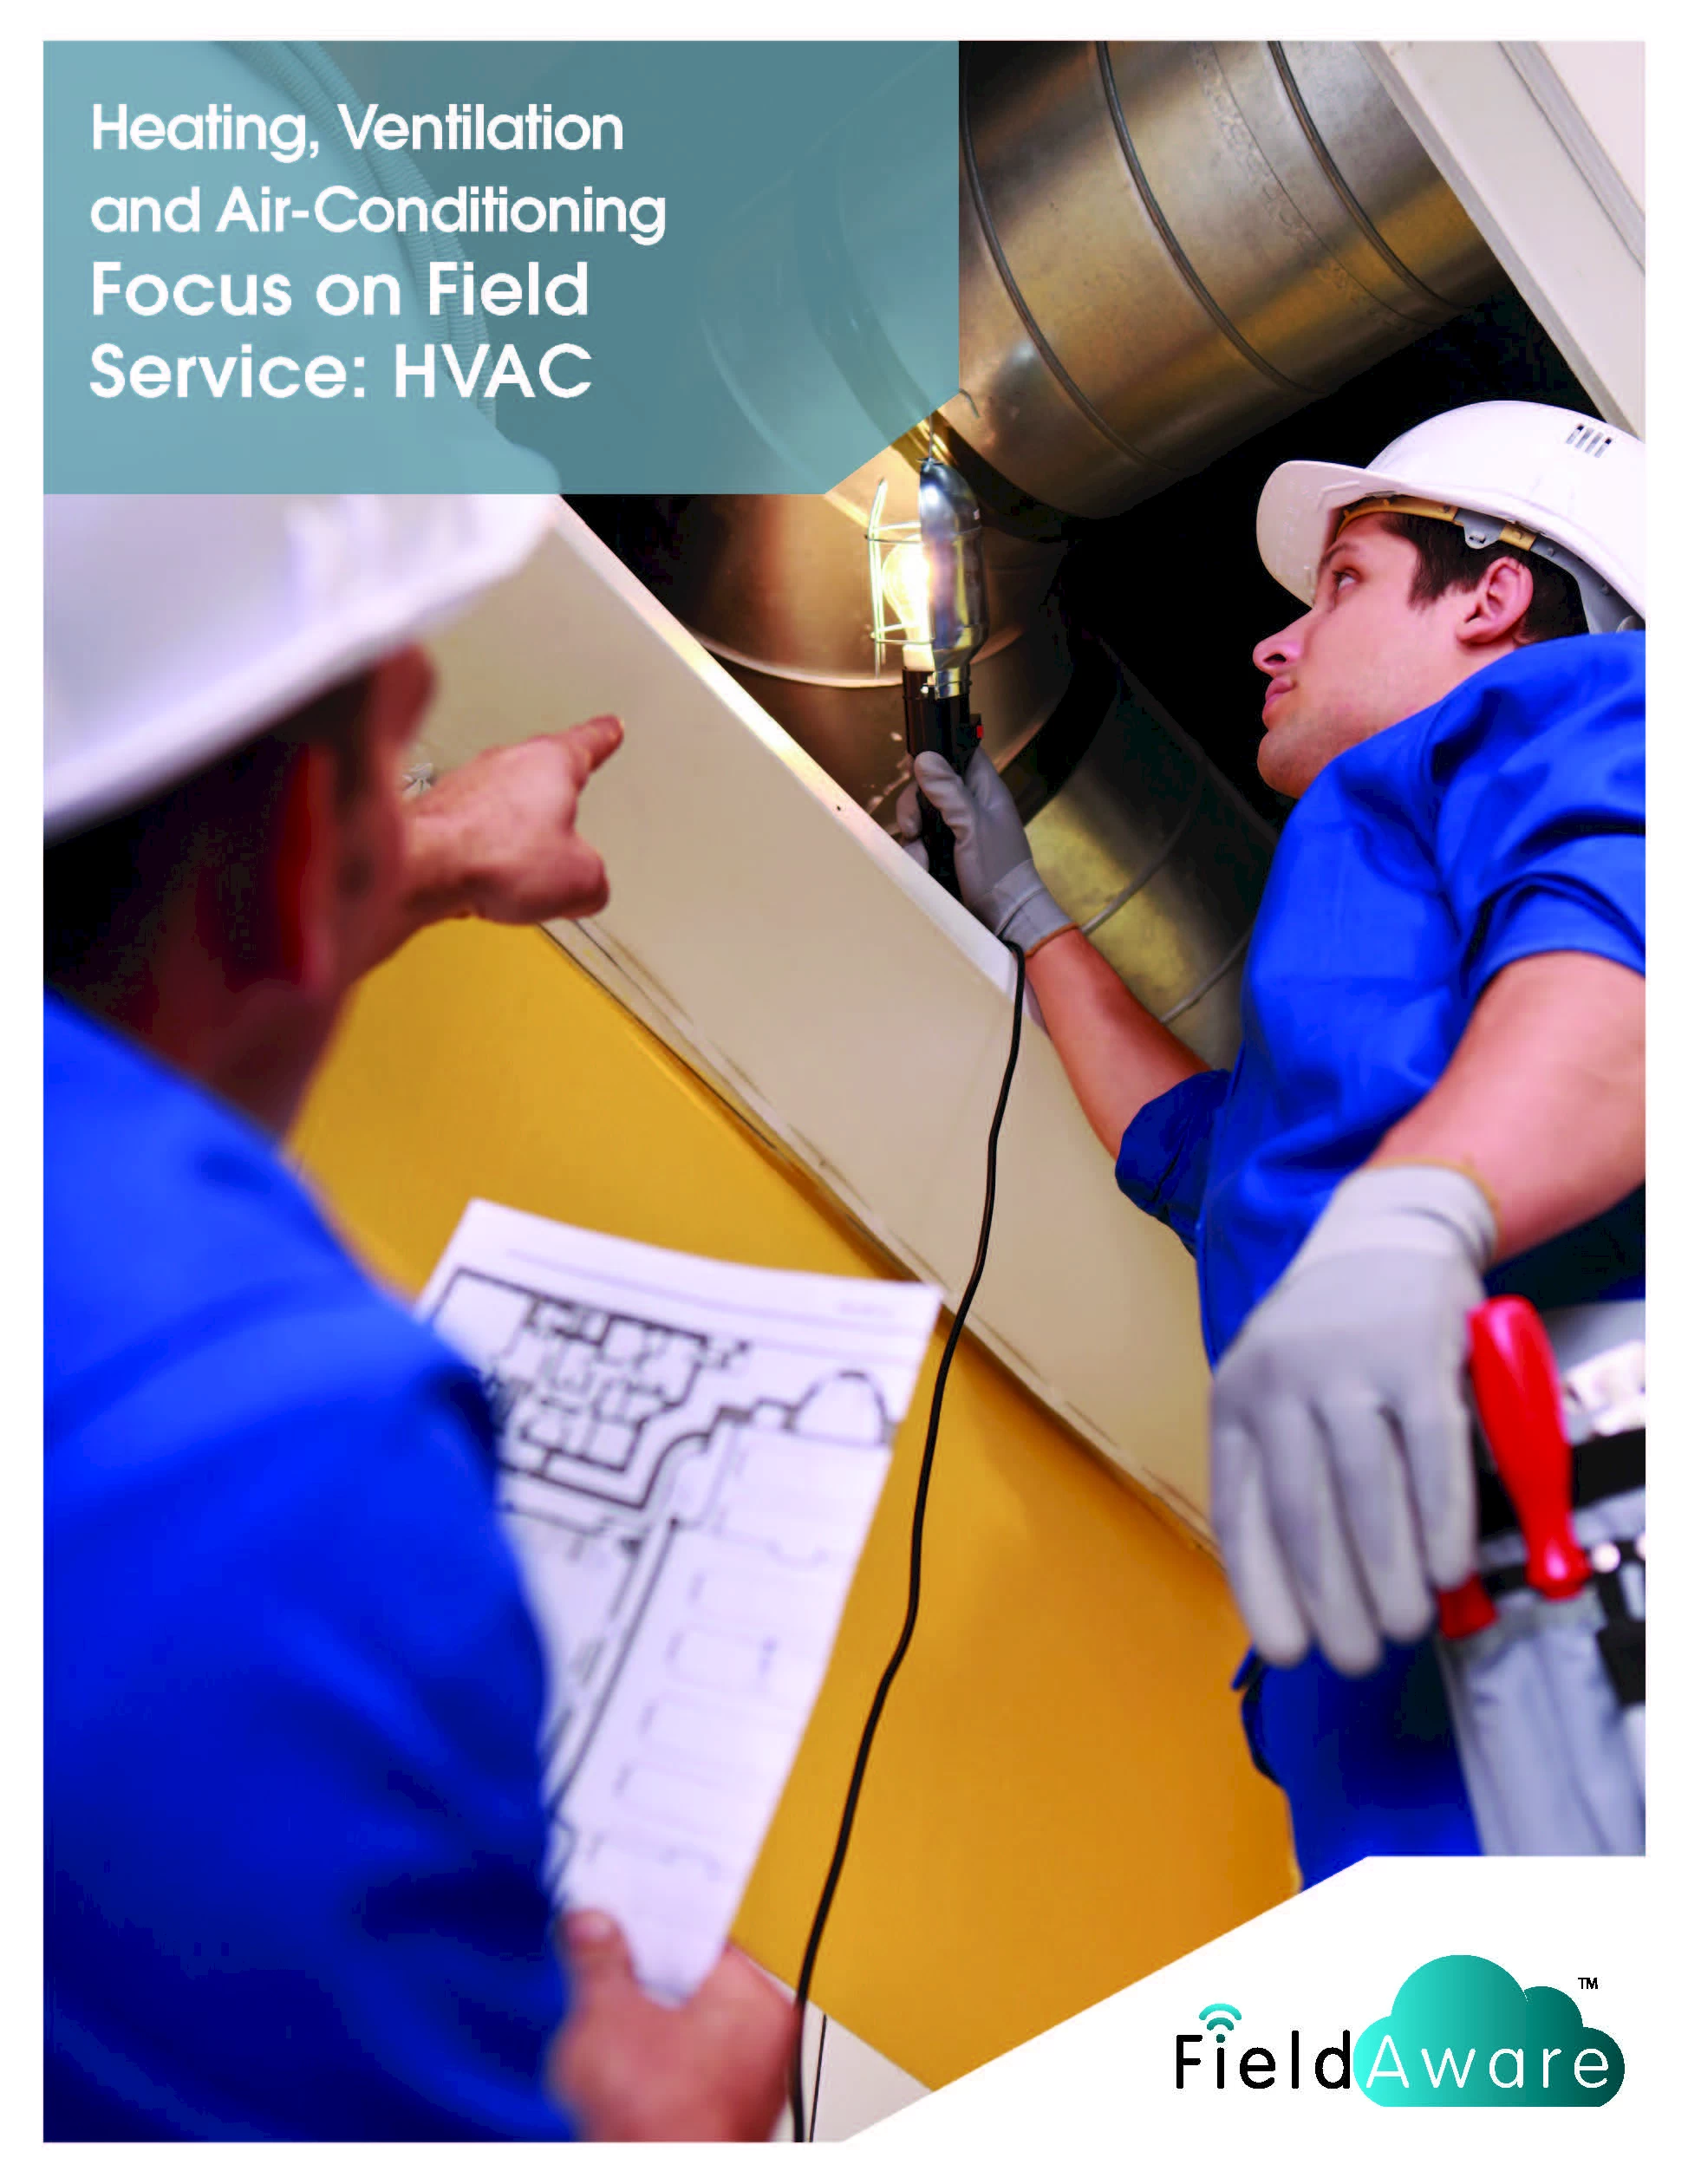 Focus on Field Service - HVAC White Paper